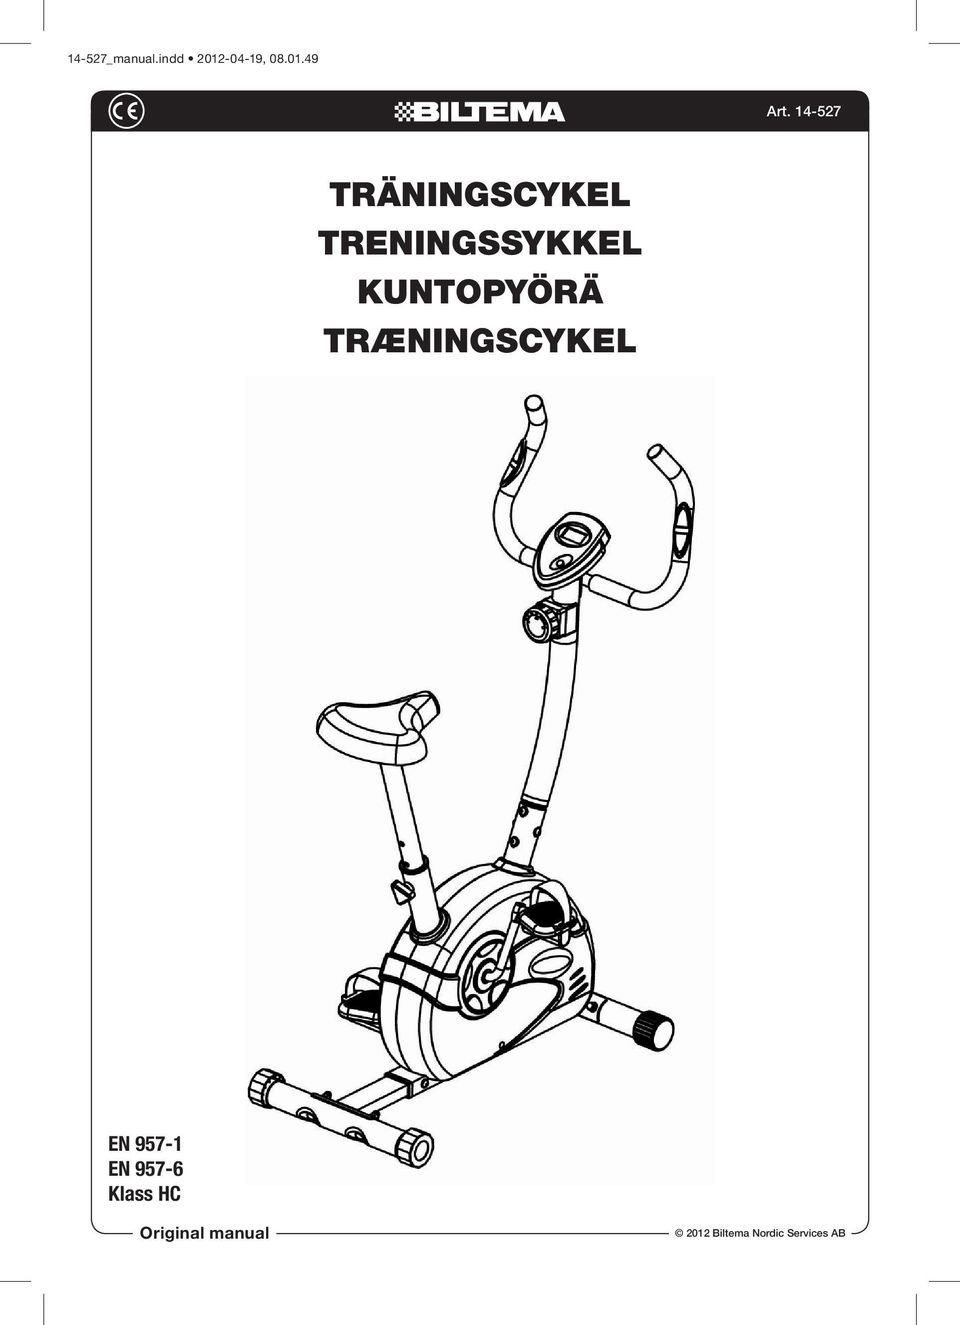 BIKE Kuntopyörä Træningscykel EN 957-1 EN 957-6